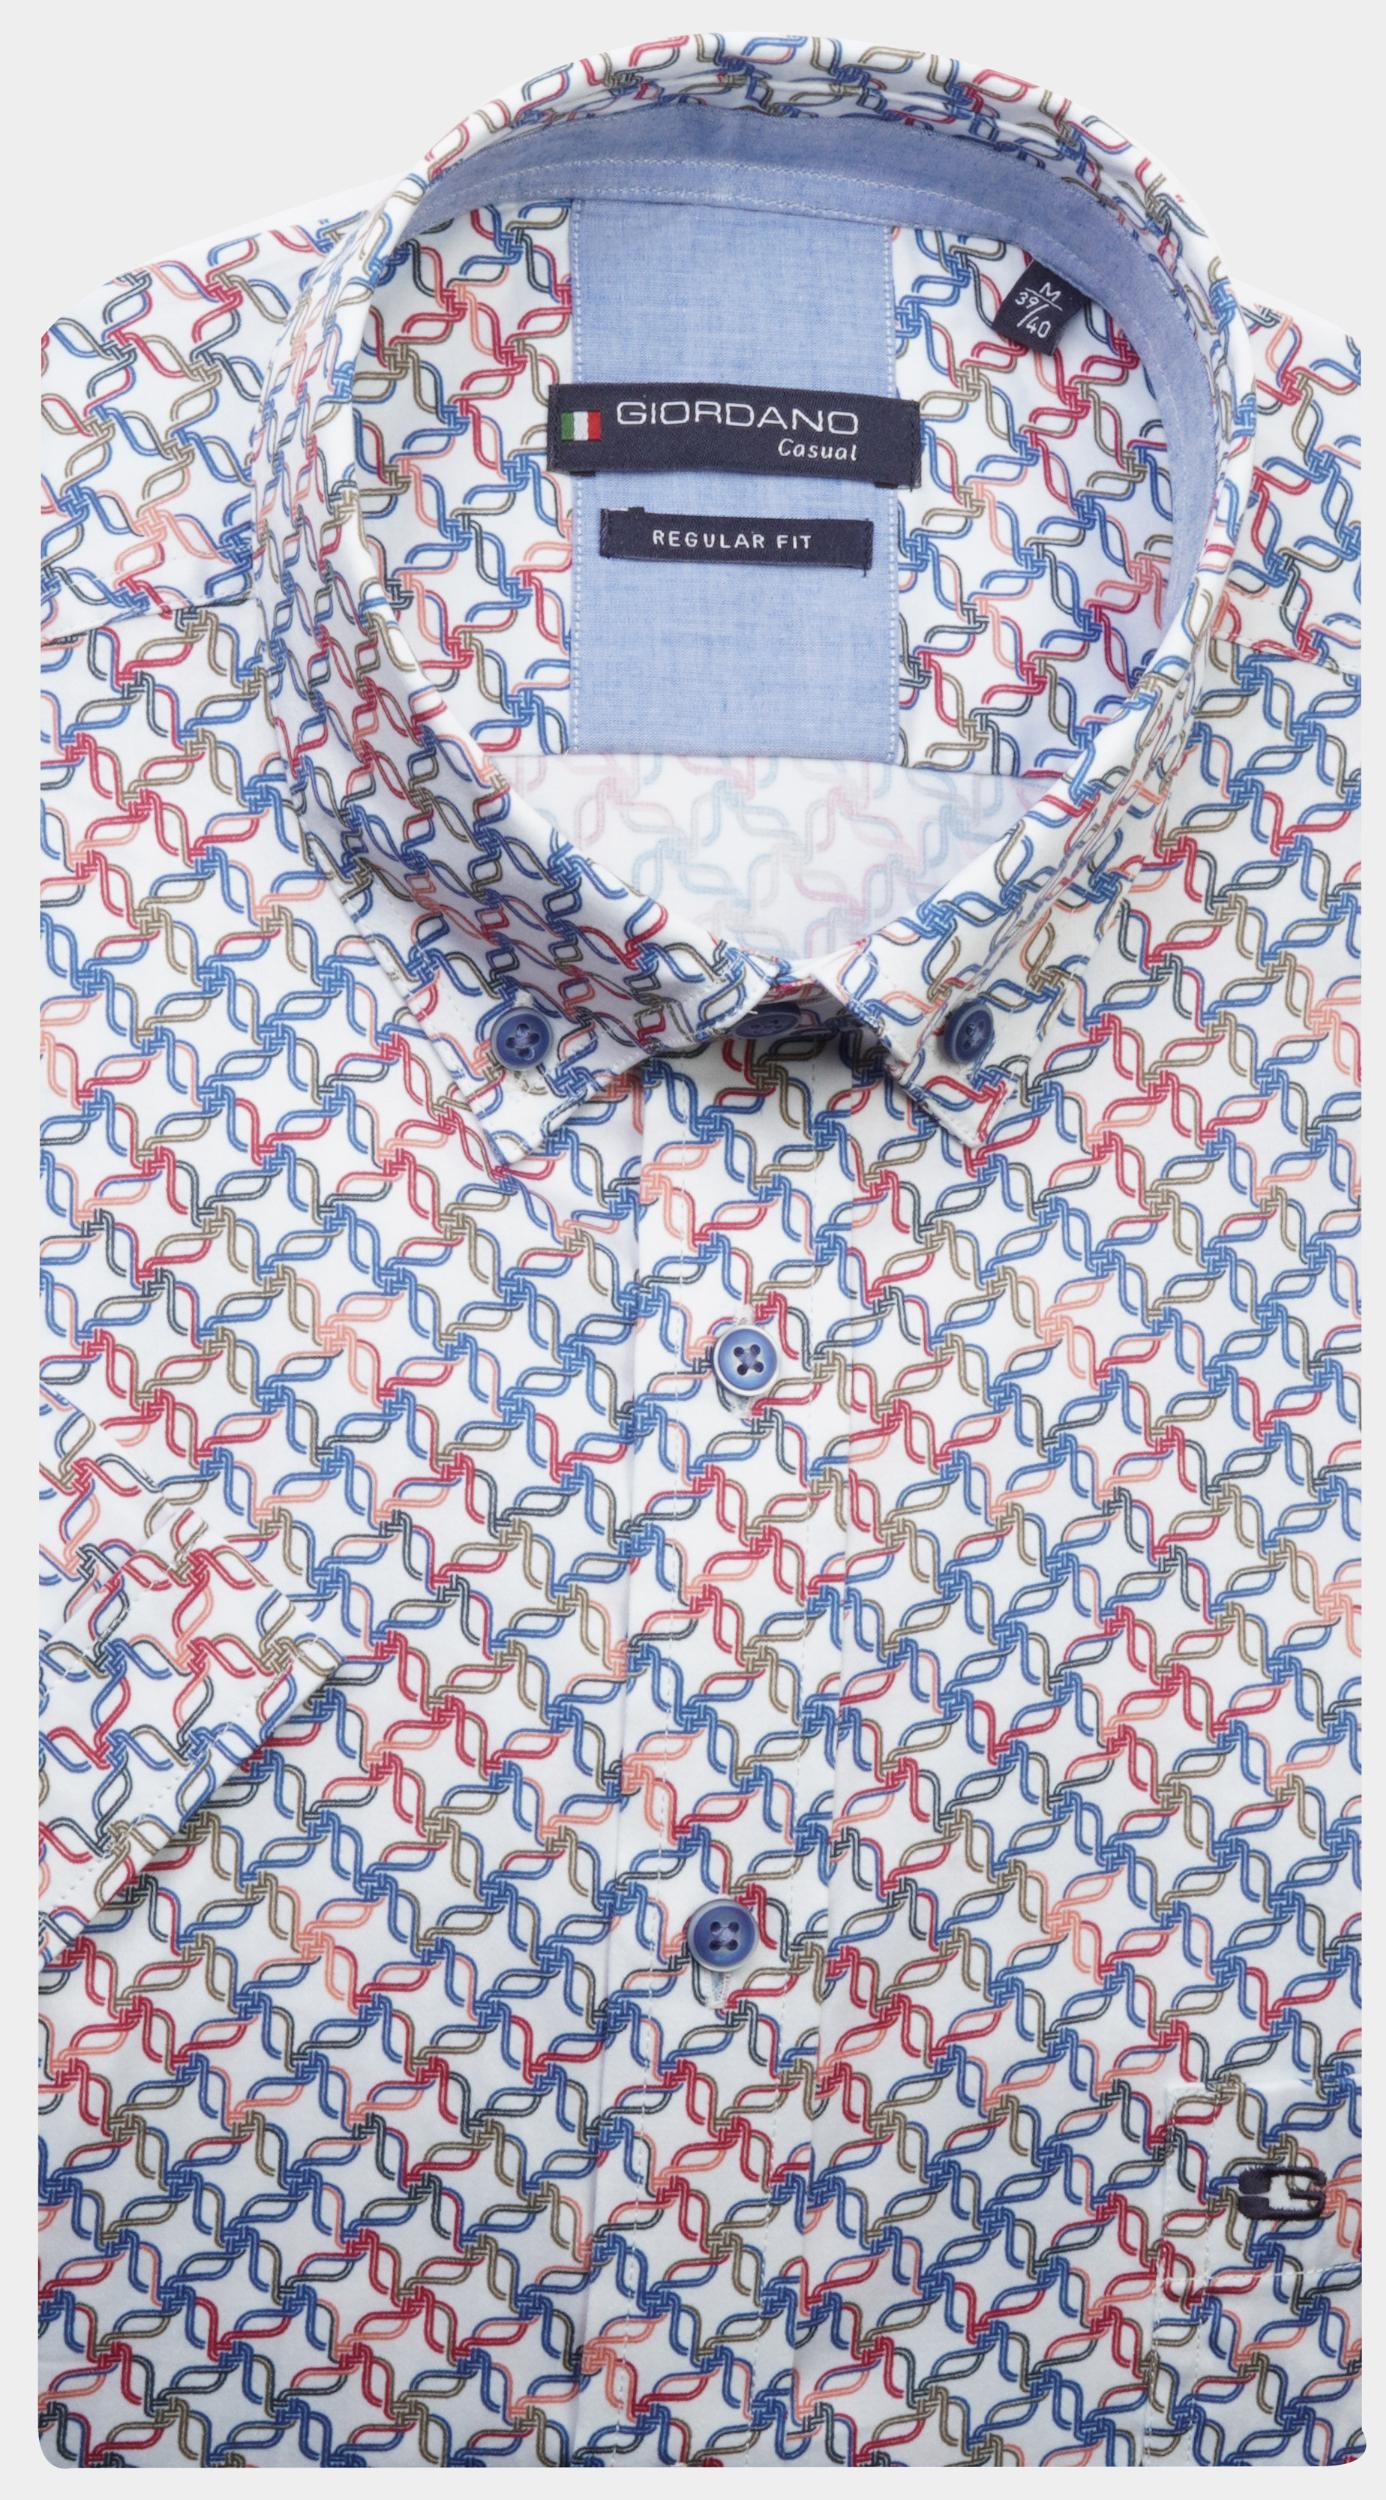 Giordano Casual hemd korte mouw Multi League Chains Print 416030/30